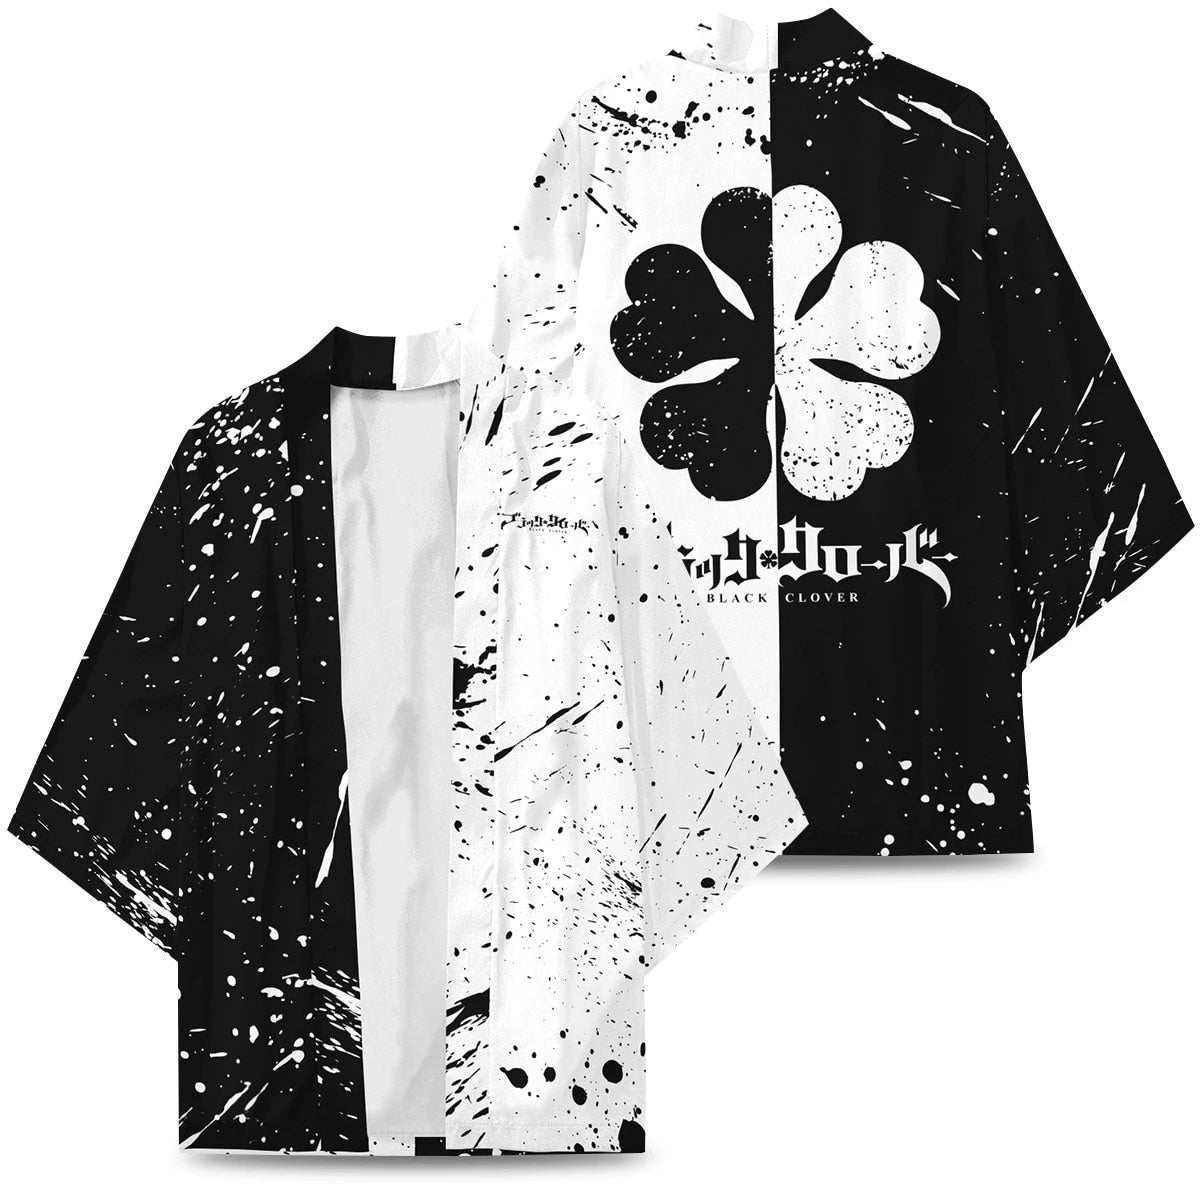 Black And White Kimono Coat Black Clover - House Of Fandom